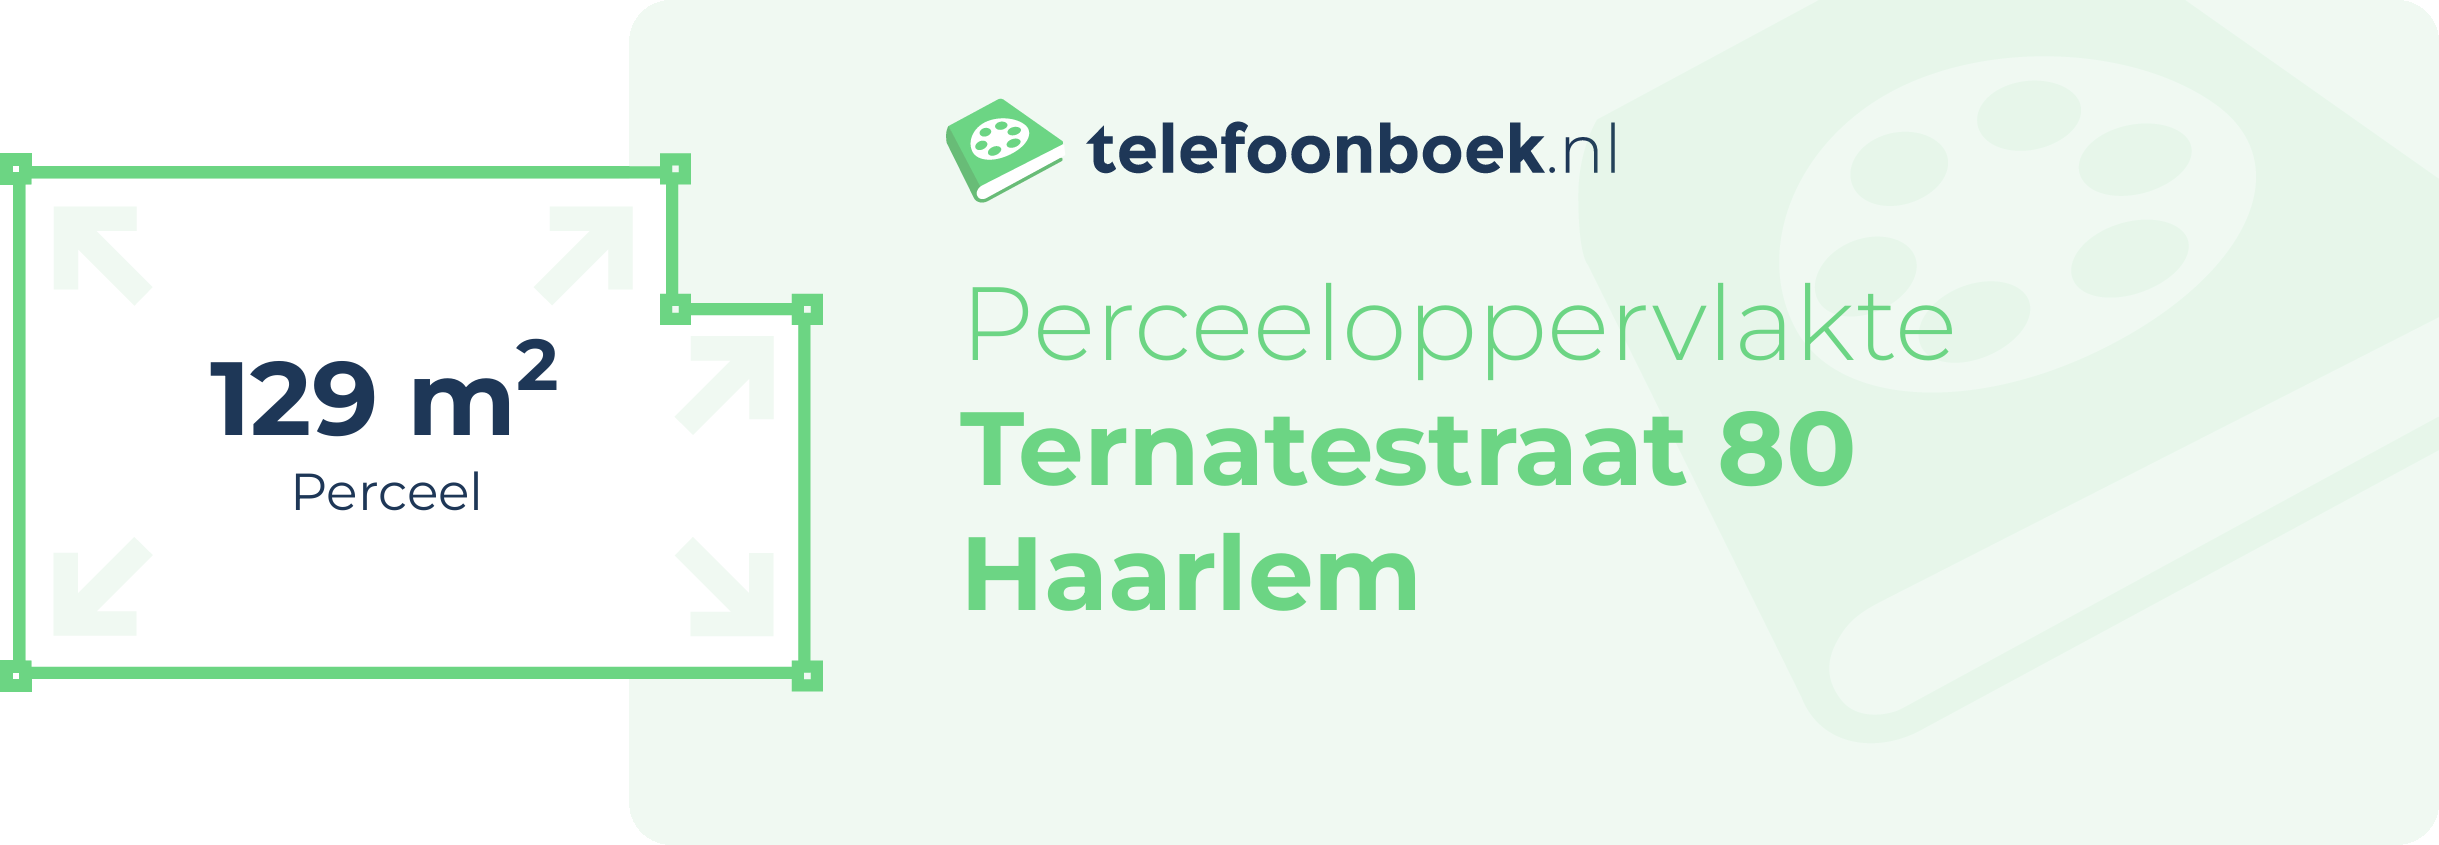 Perceeloppervlakte Ternatestraat 80 Haarlem